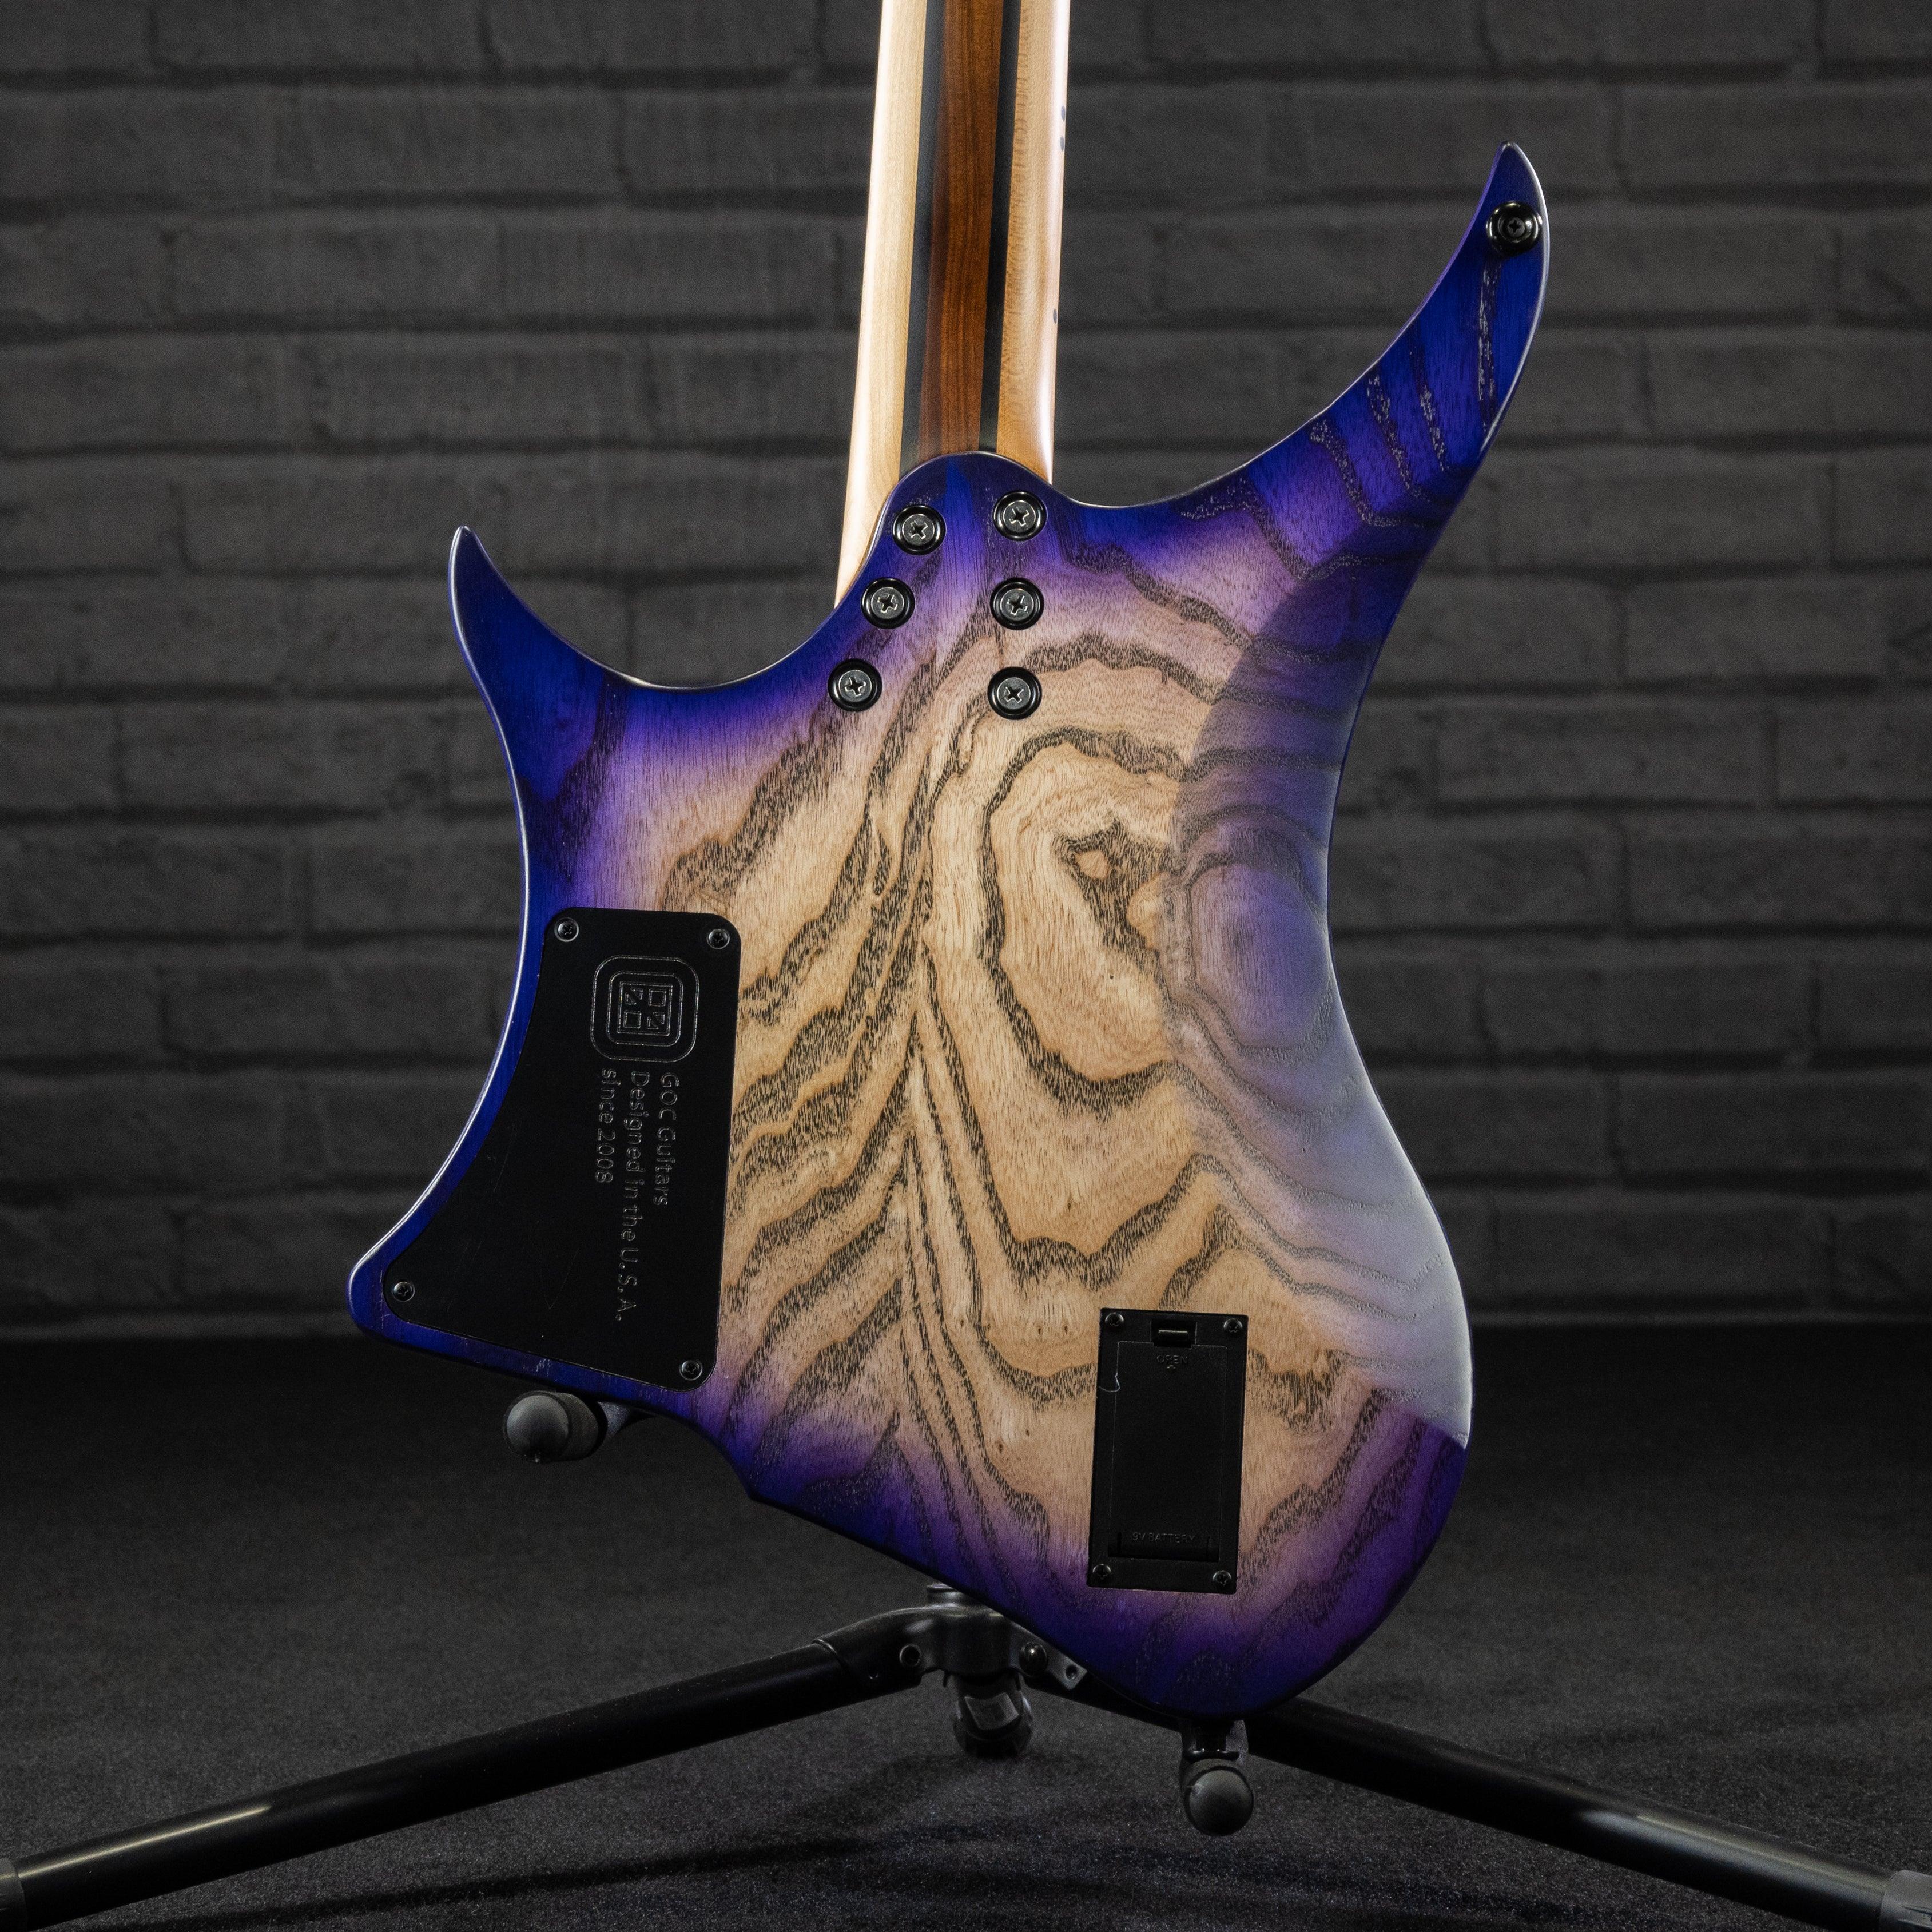 GOC E Series Materia 6 Headless 6-String(Purple Burl Burst) - Impulse Music Co.